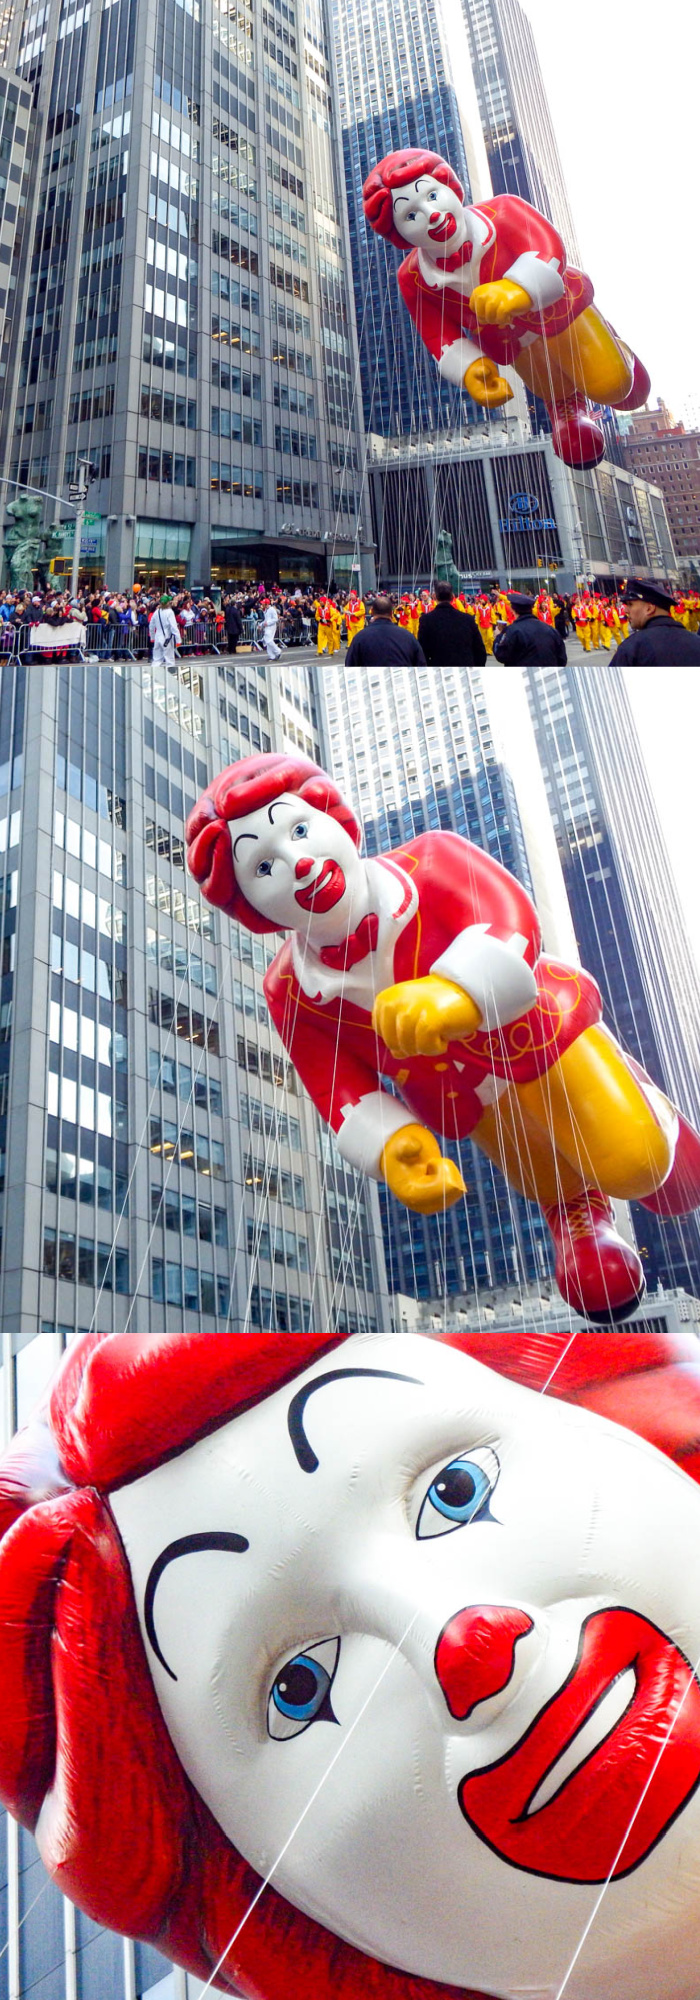 ronald mcdonald balloon at the macy's thanksgiving parade